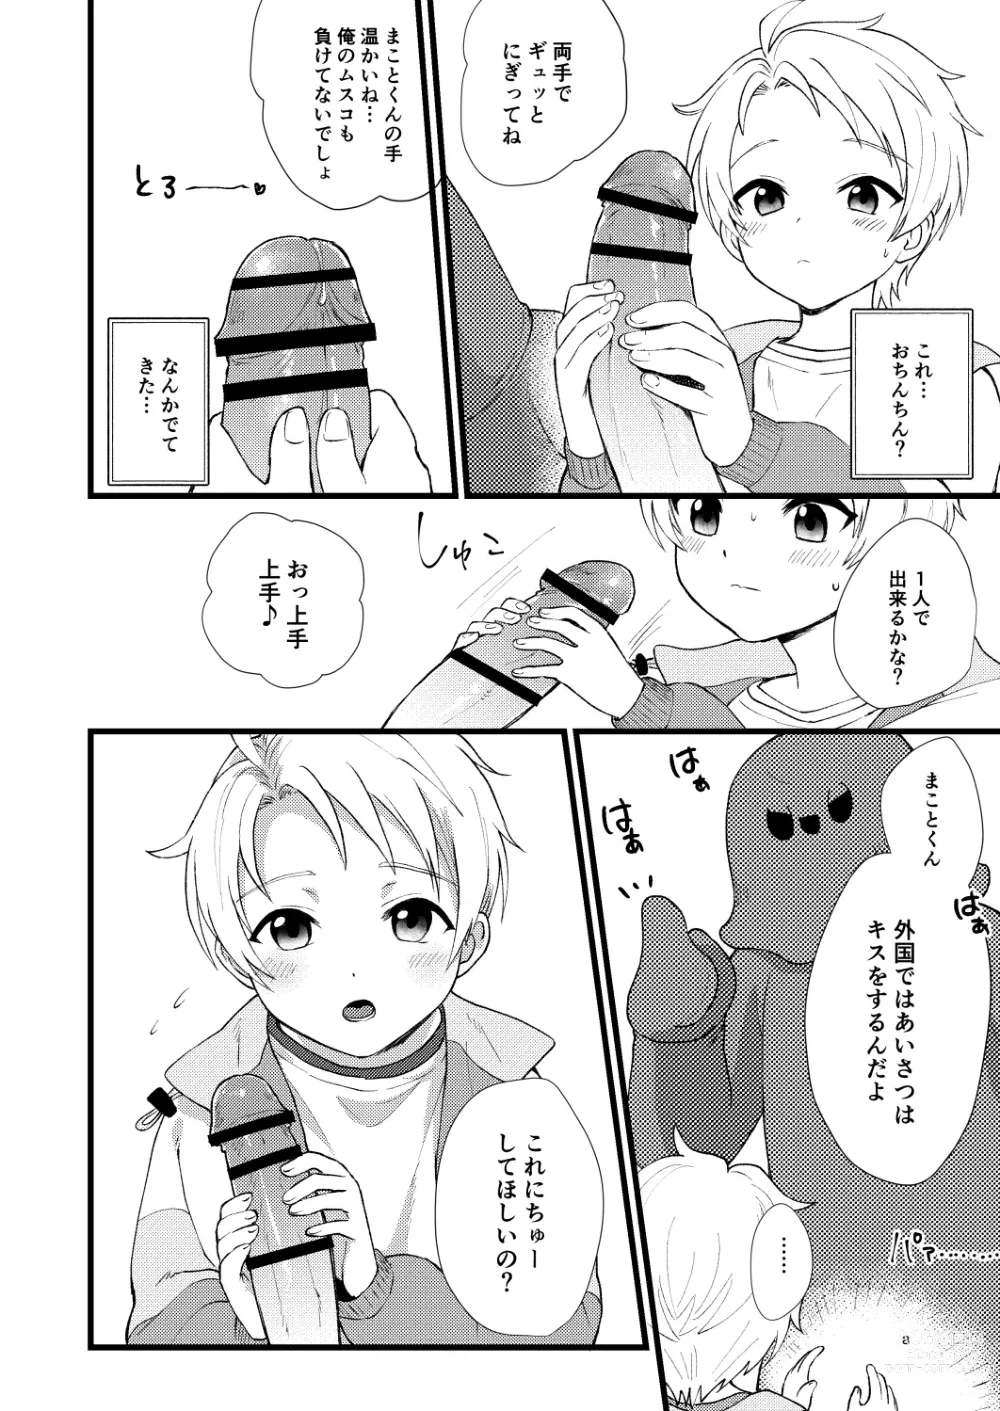 Page 9 of doujinshi Tasukete Onii-chan